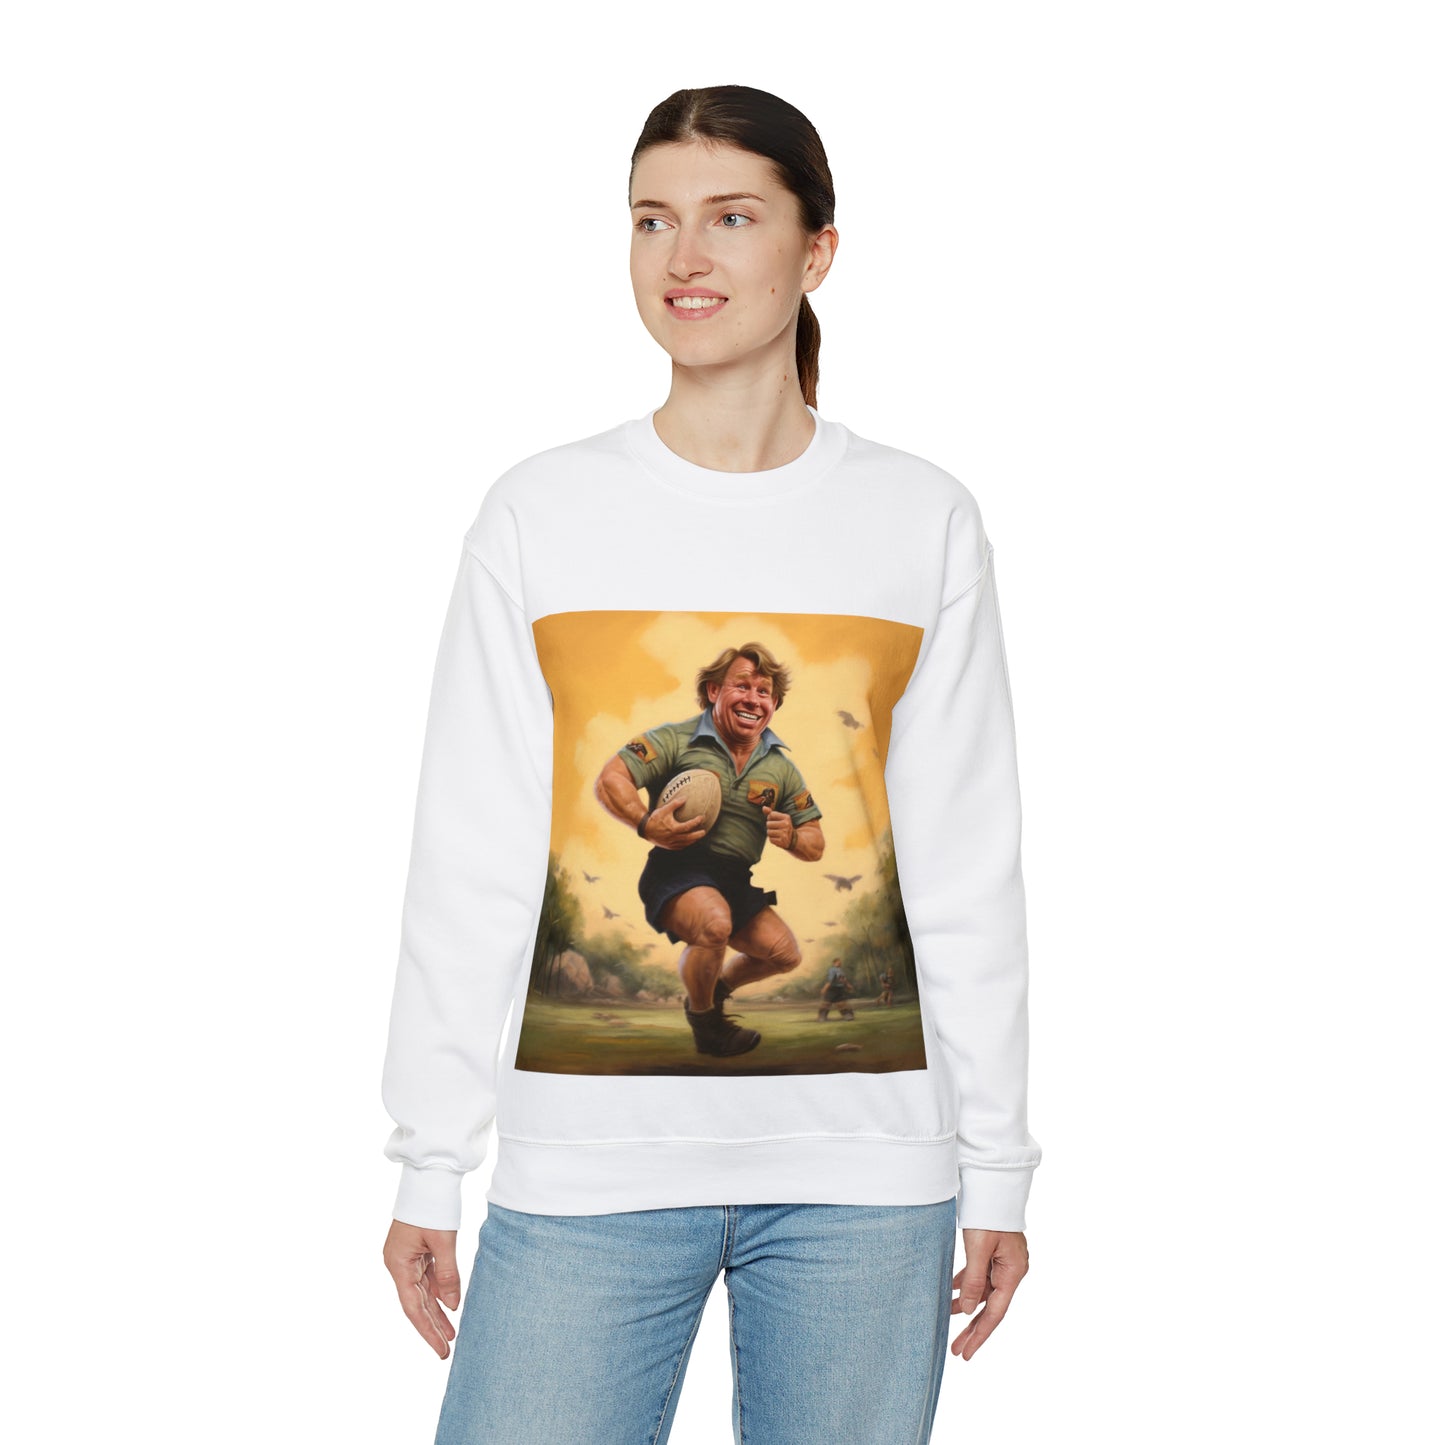 Steve Irwin - light sweatshirts